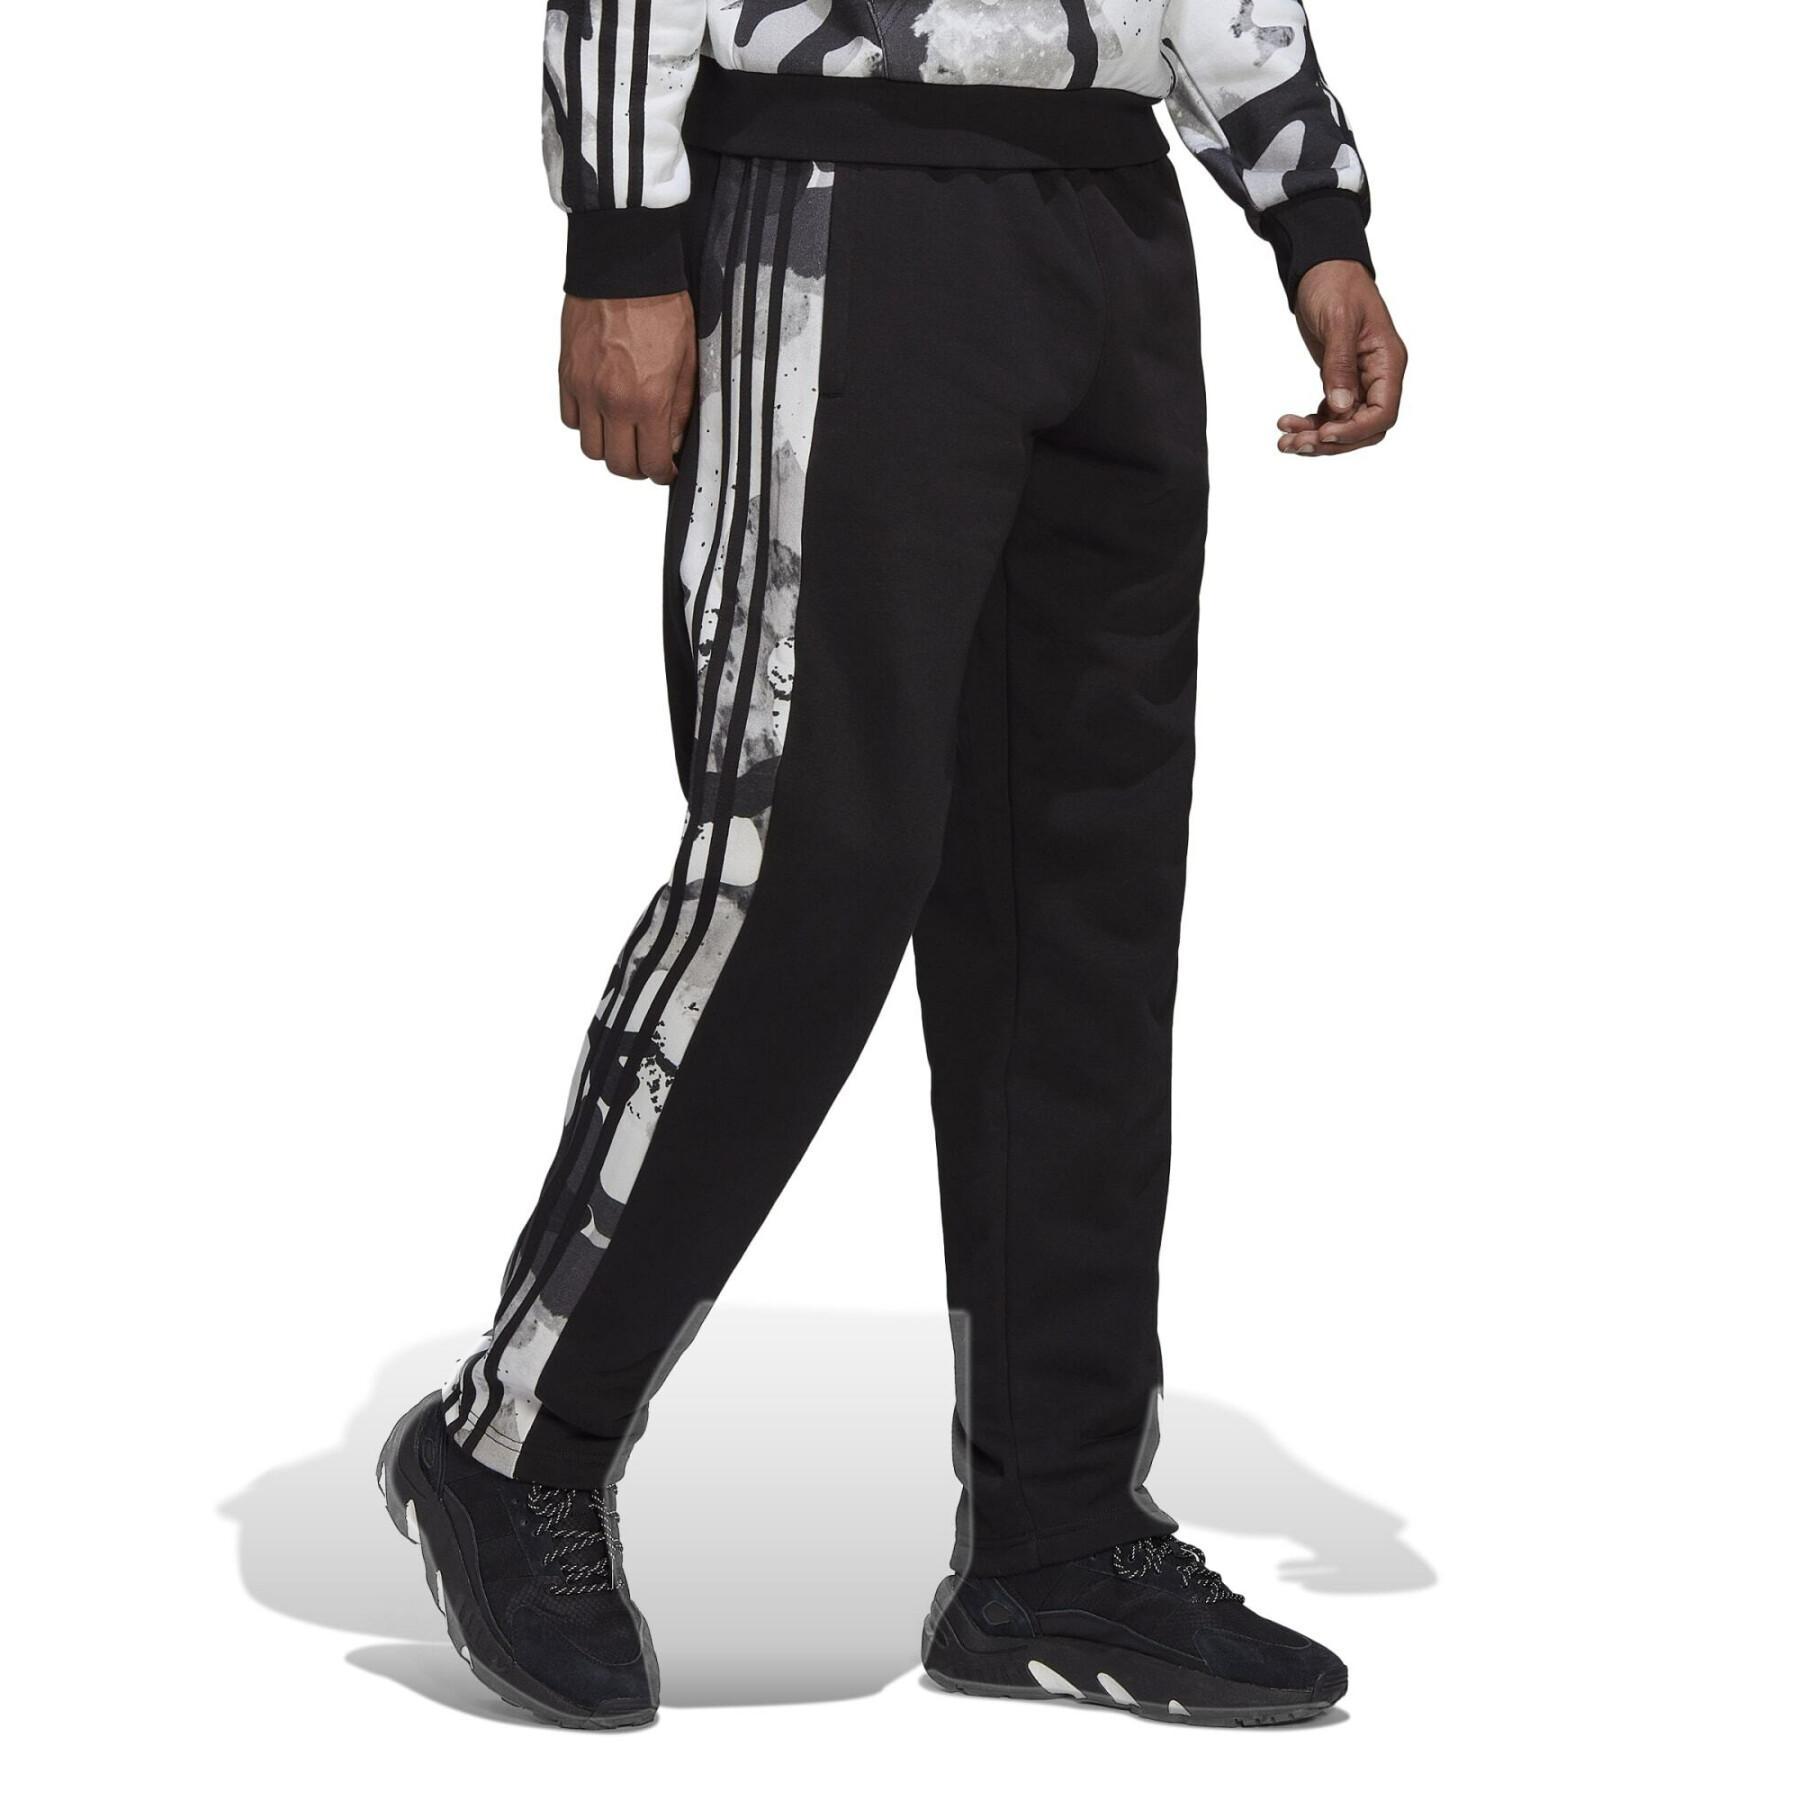 Polarowy strój do joggingu adidas Originals Series